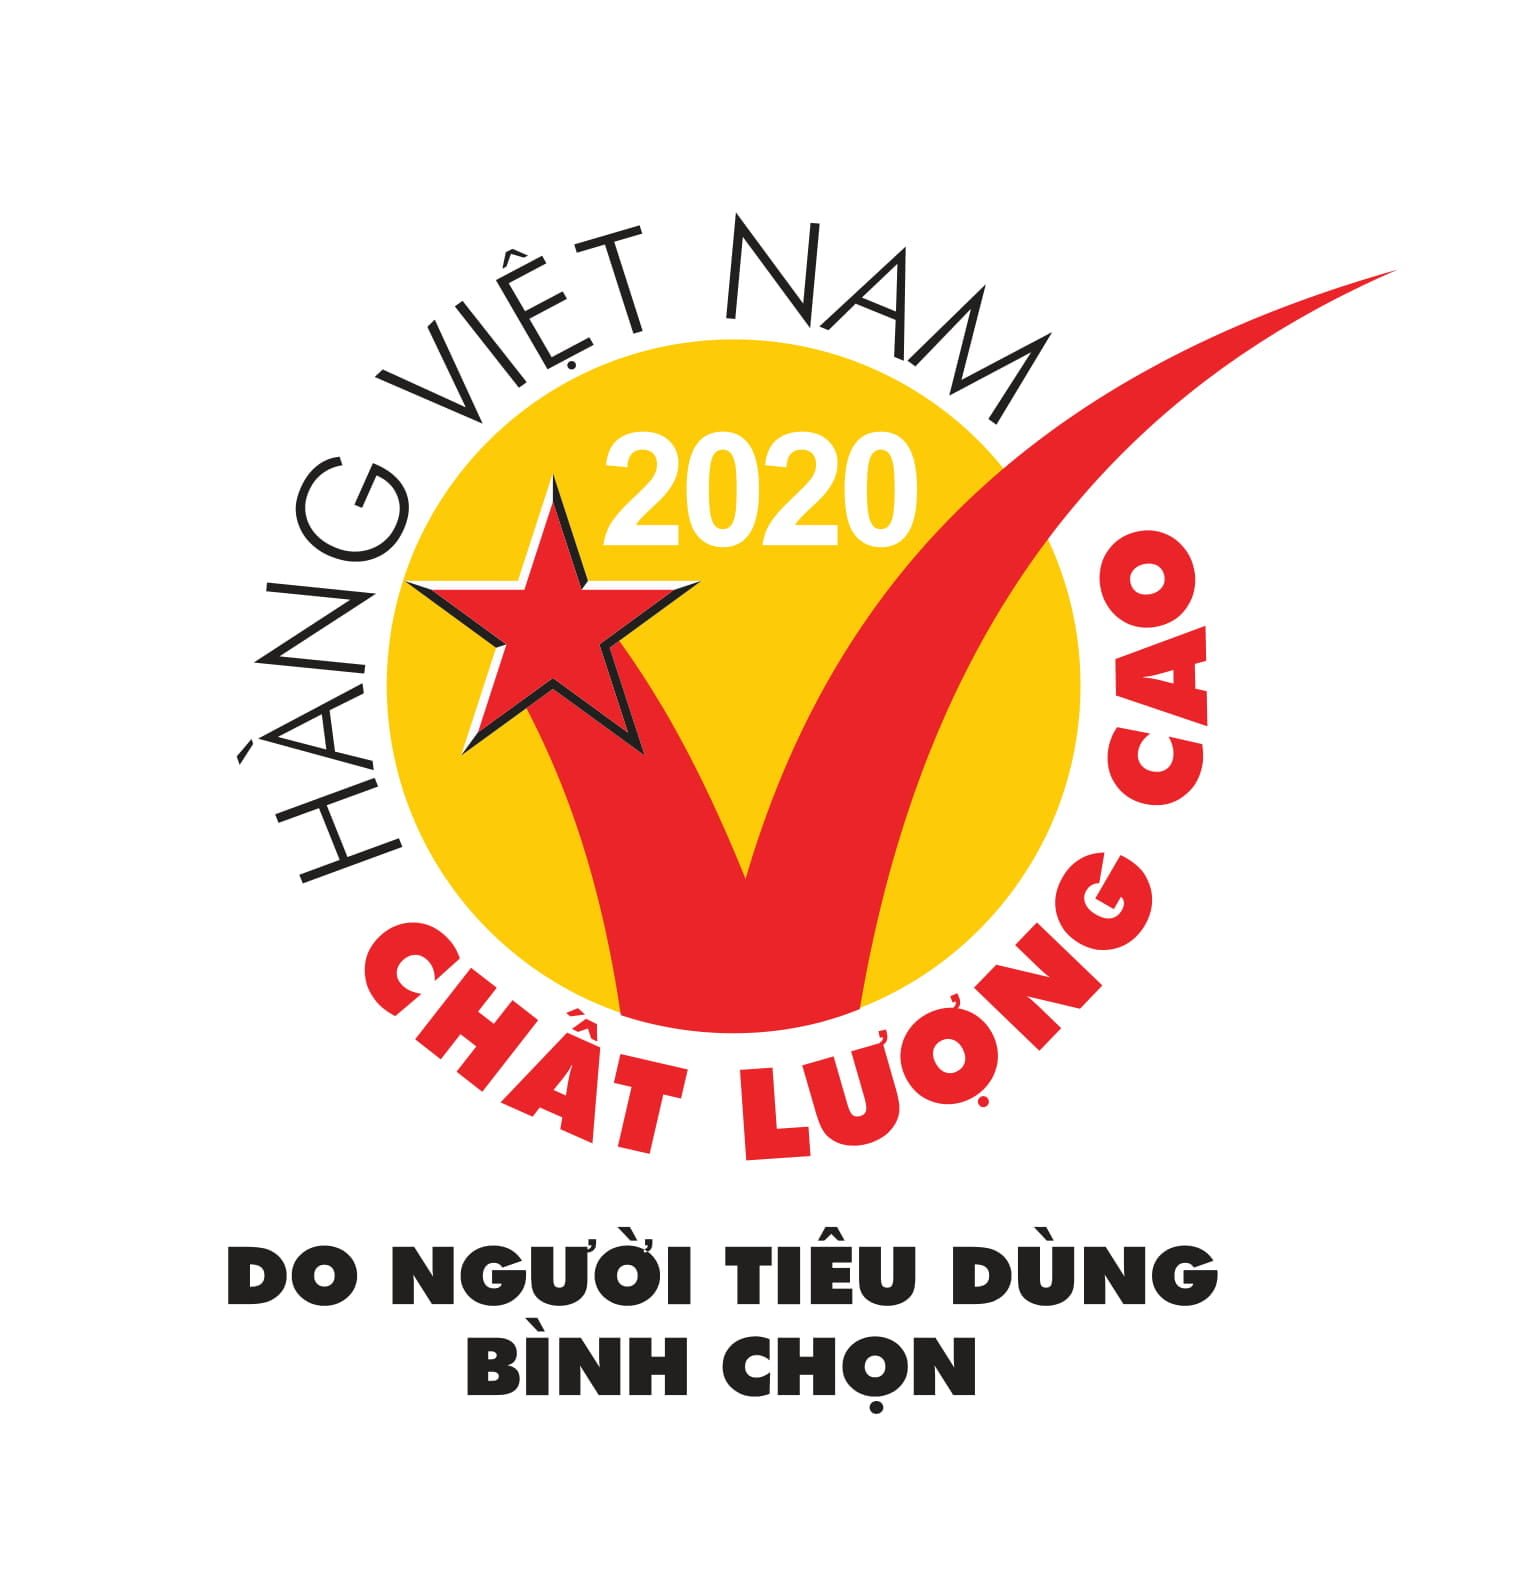 chung-nhan-hang-viet-nam-chat-luong-cao-nam-2020